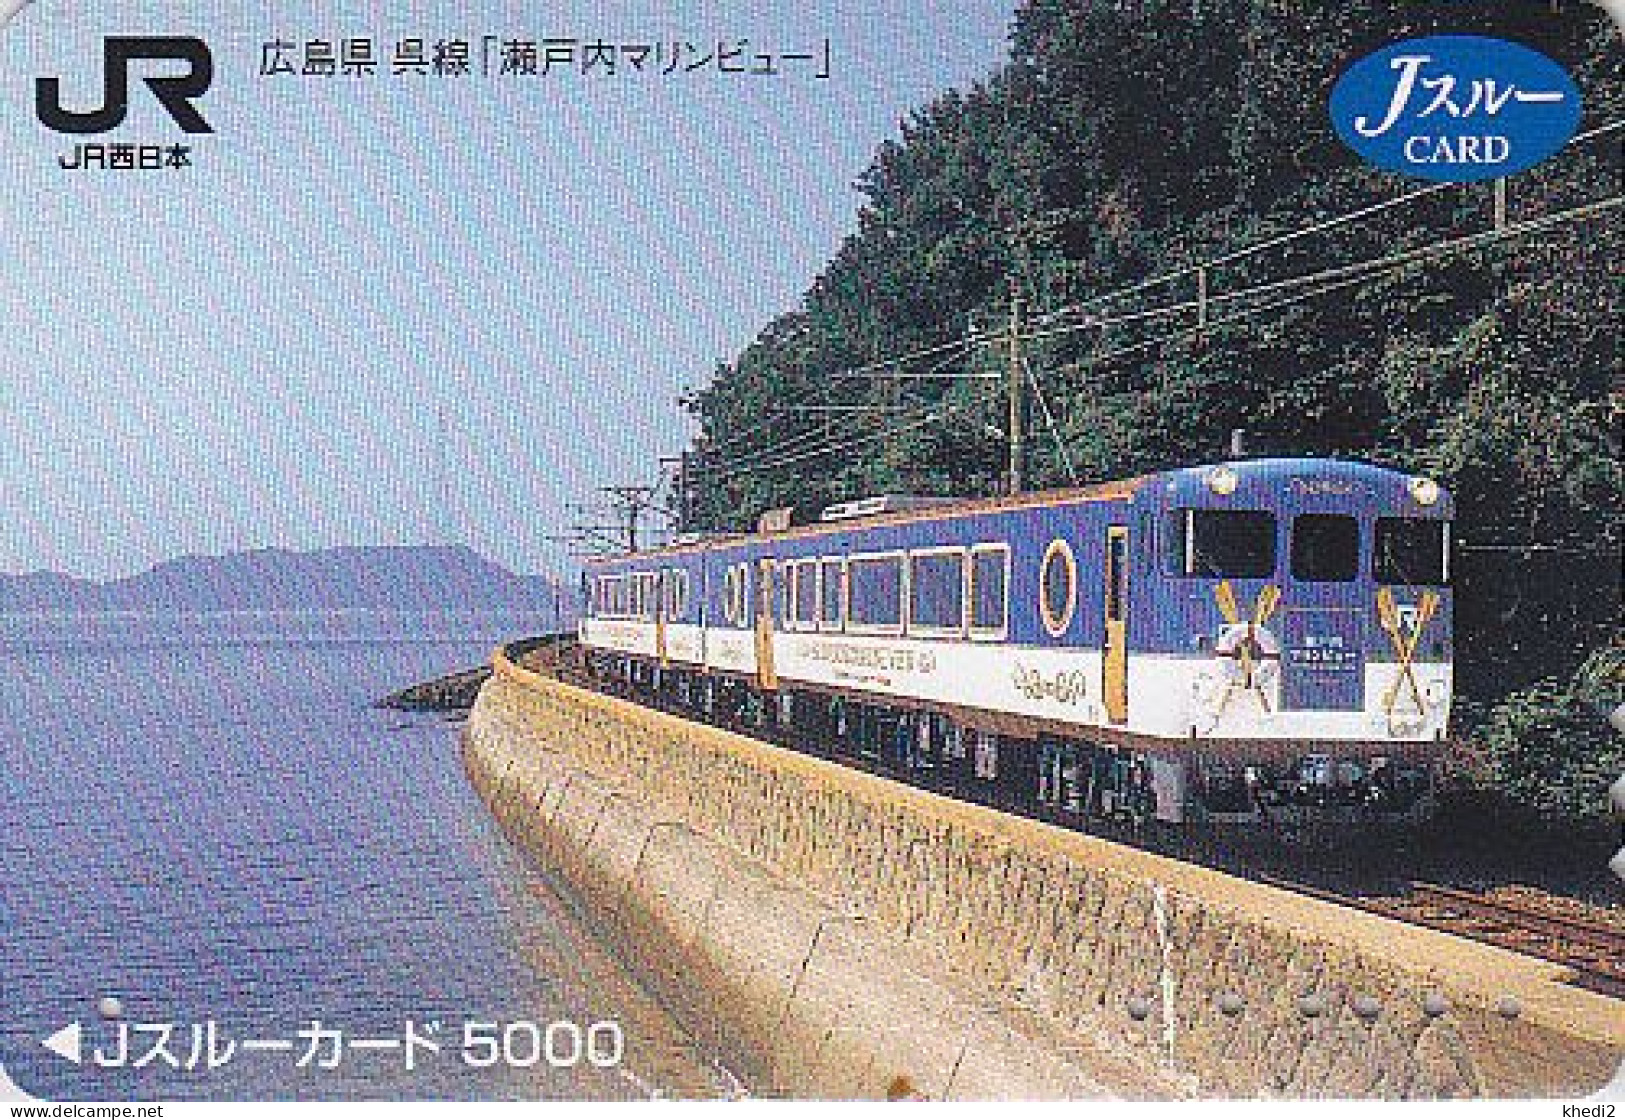 Carte Prépayée JAPON - TRAIN Décoré Bord De Mer Sea Side - JAPAN Prepaid JR J Card - ZUG Eisenbahn - TREIN - 3777 - Trains